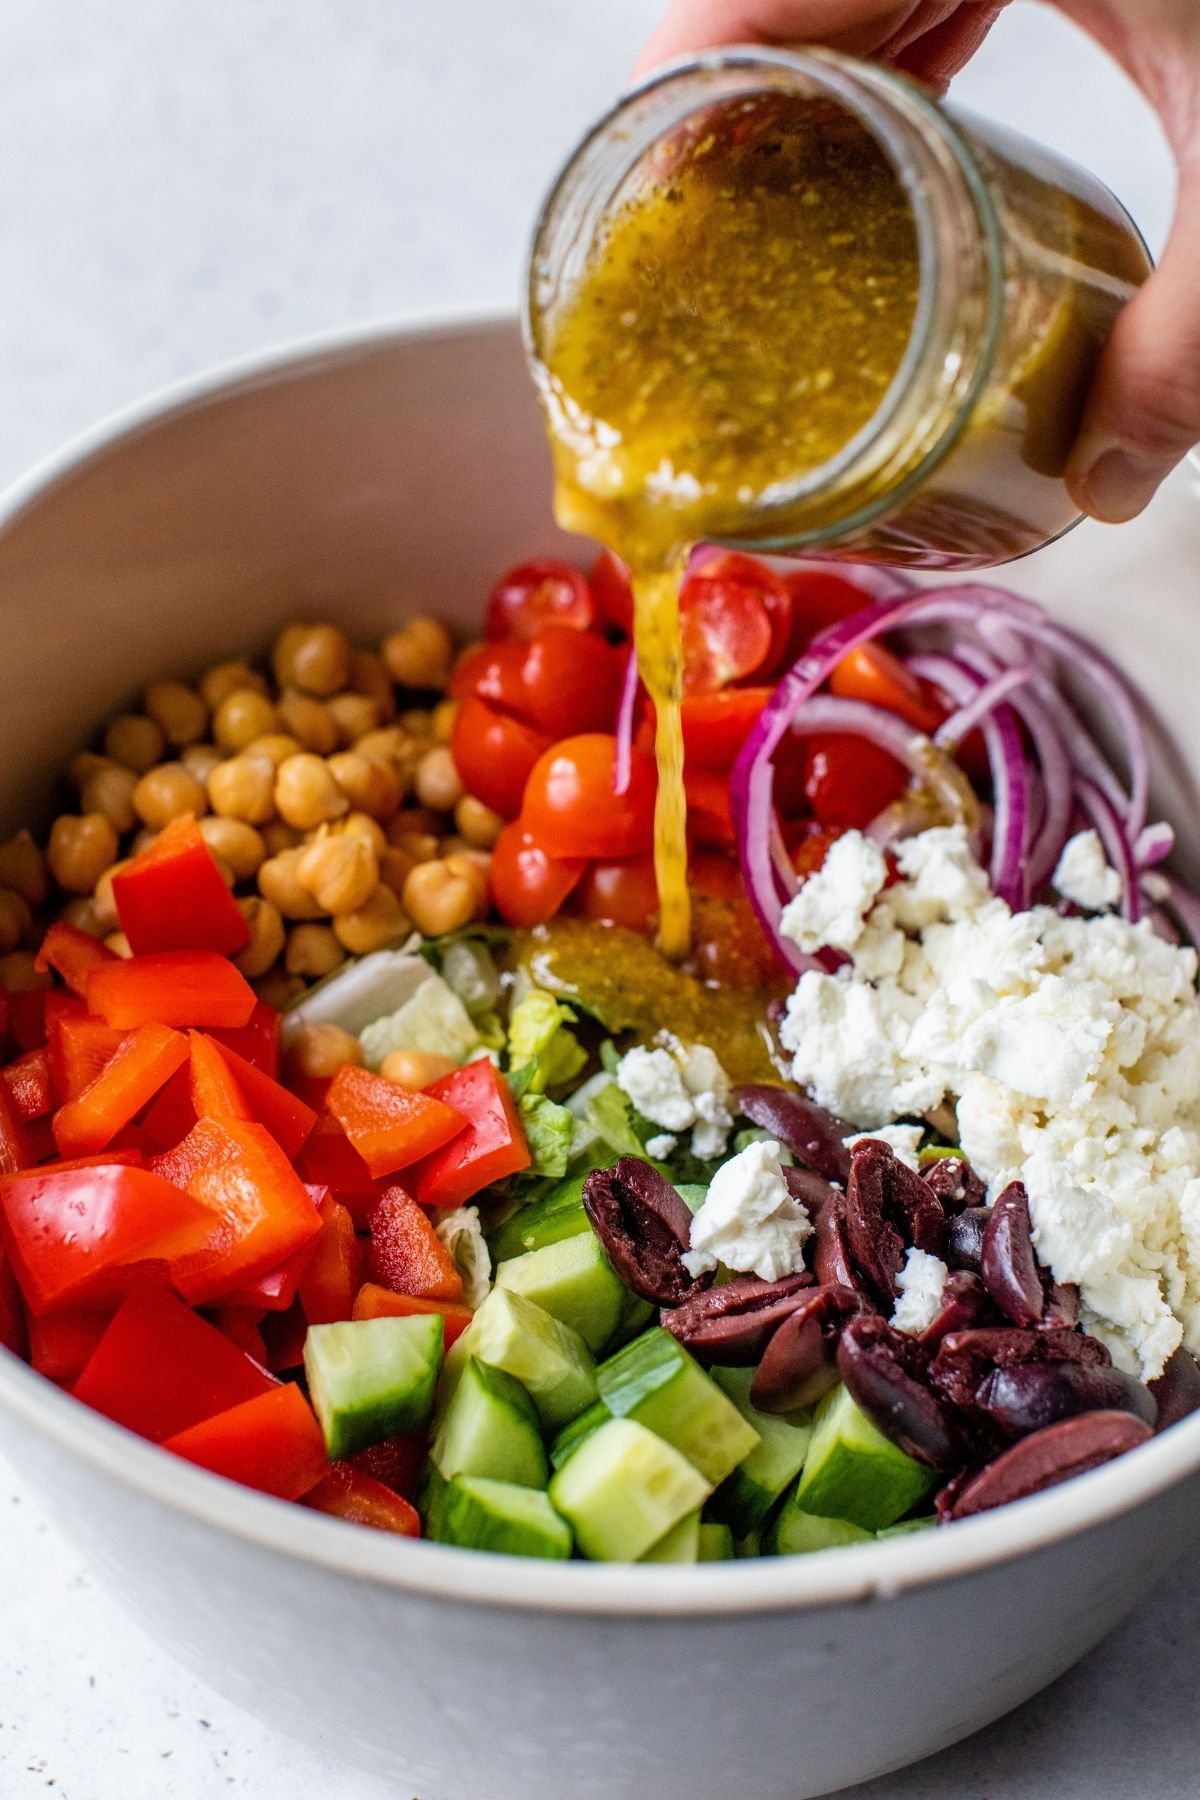 Pouring Greek salad dressing over a salad.